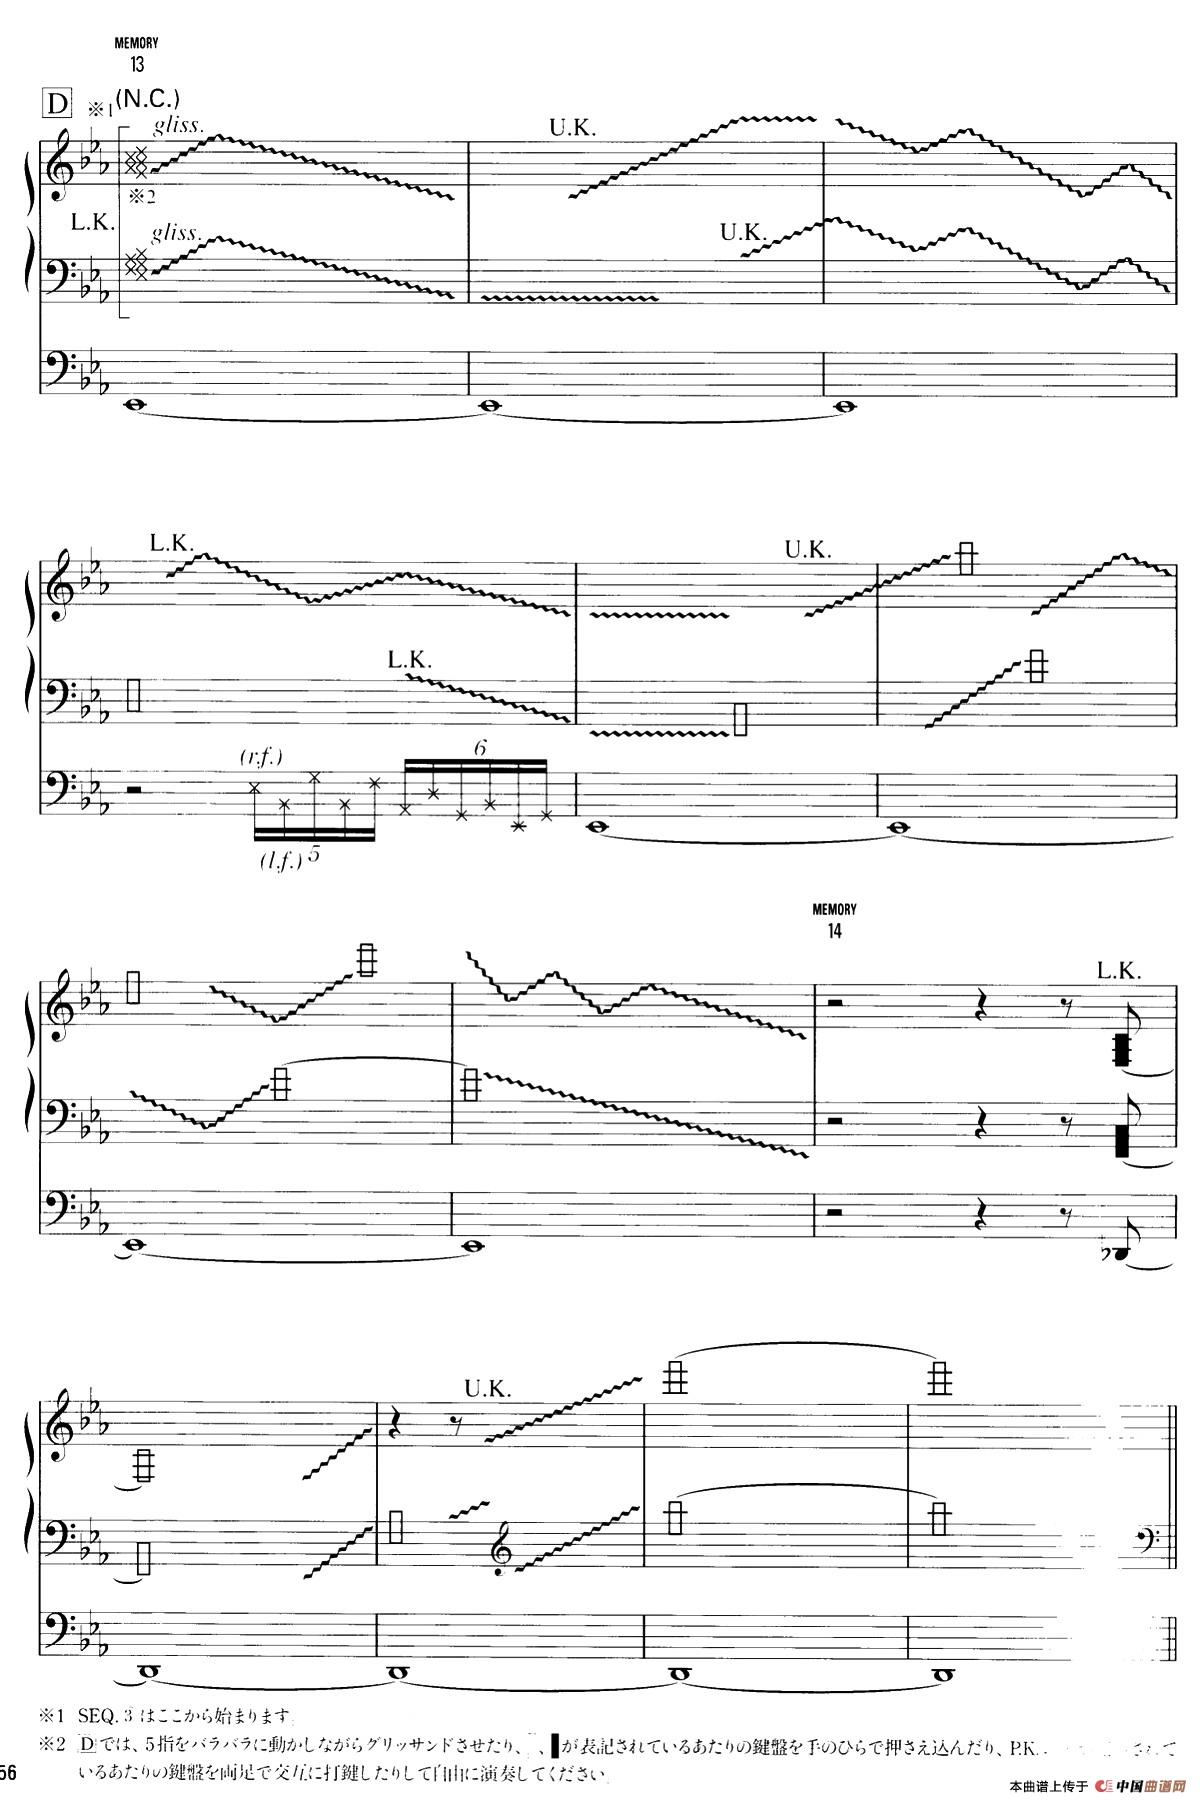 《Paradiso》 电子琴曲谱，电子琴入门自学曲谱图